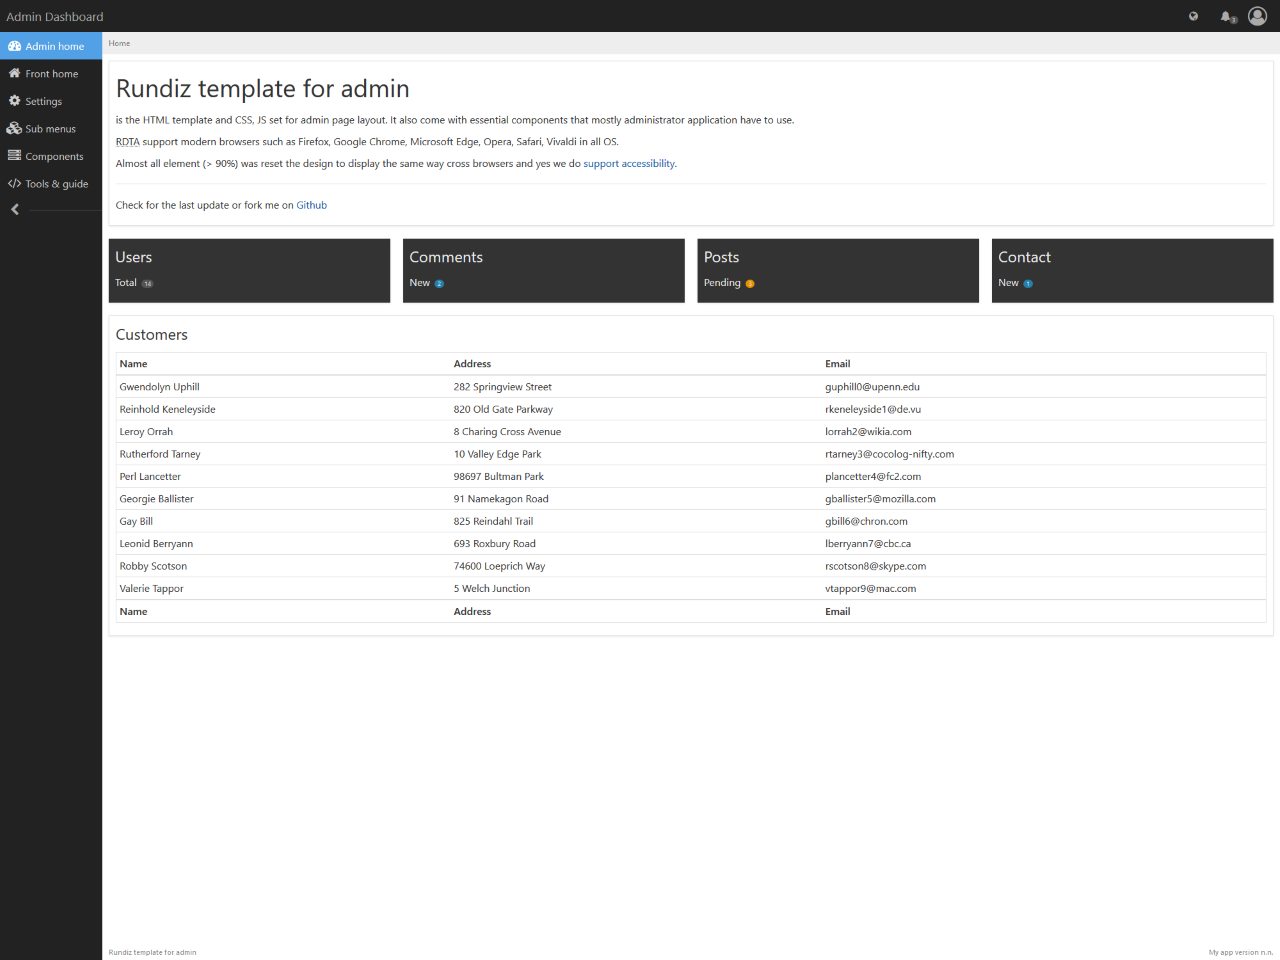 Rundiz template for admin basic layout